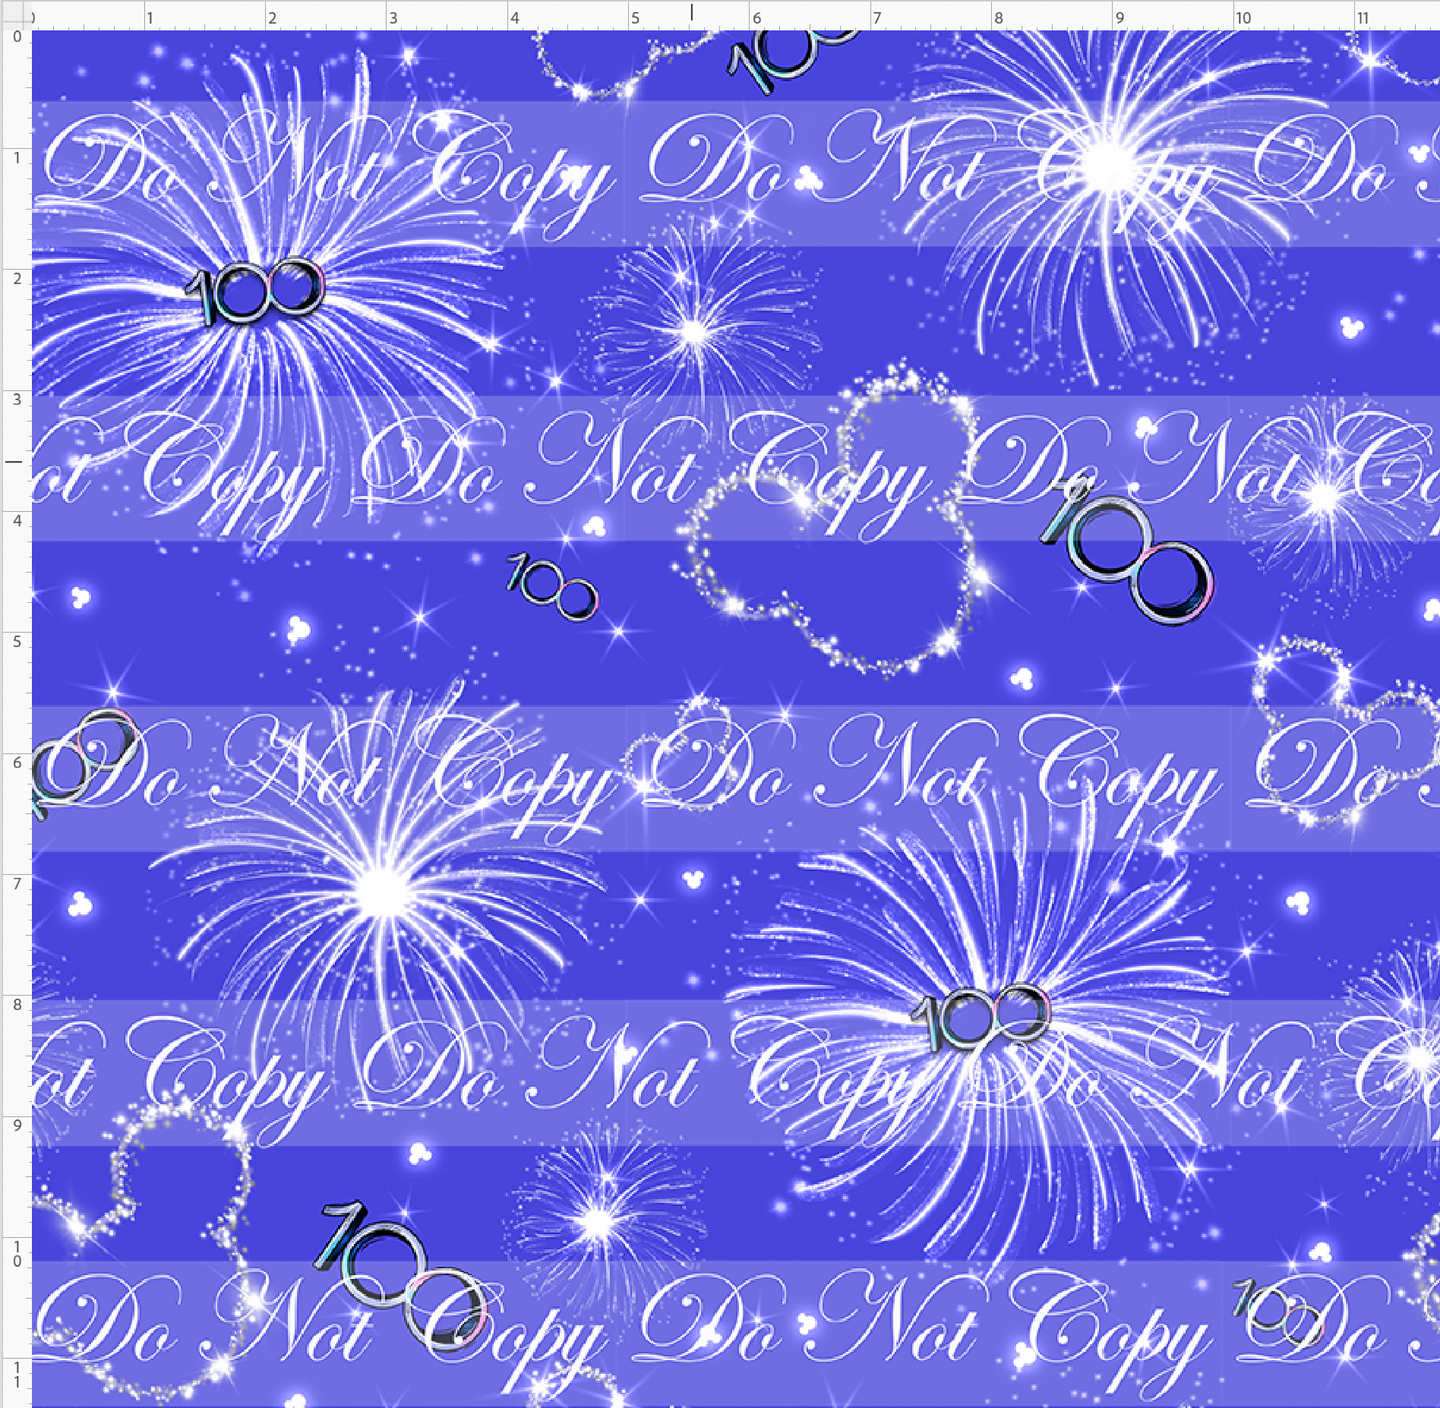 PREORDER - 100 Years of Wonder - Fireworks - REGULAR SCALE